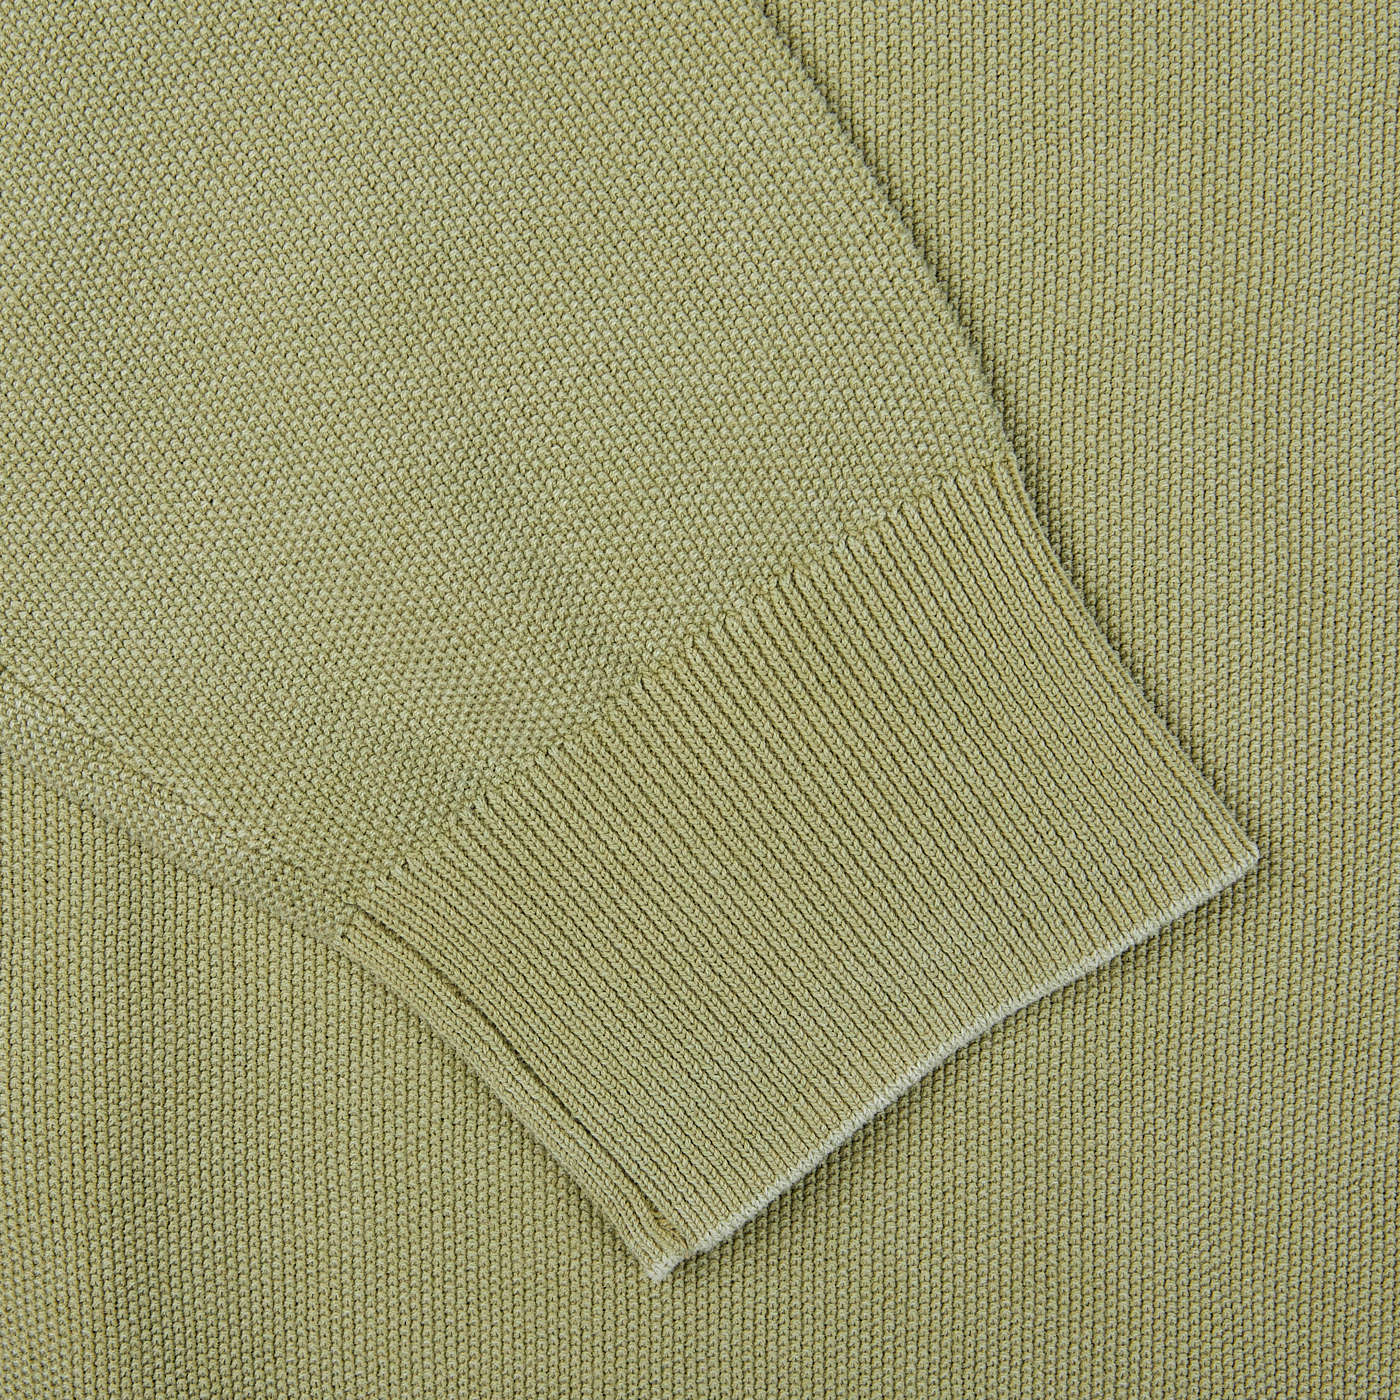 A close up of a Aspesi sage green, crew neck sweater.